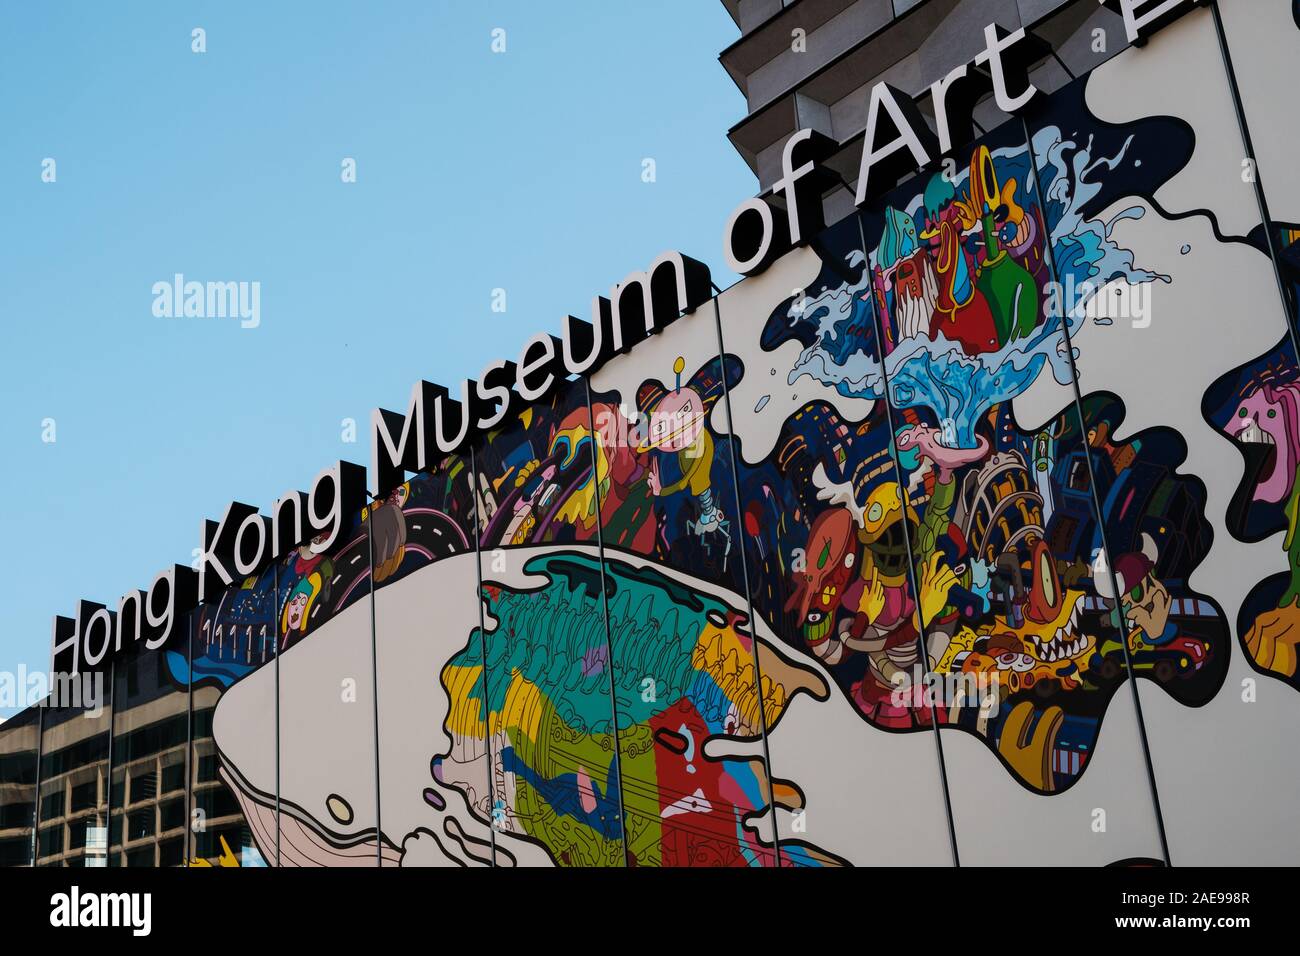 Hongkong - November, 2019: Das HongKong Museum für Kunst in Hongkong Stockfoto